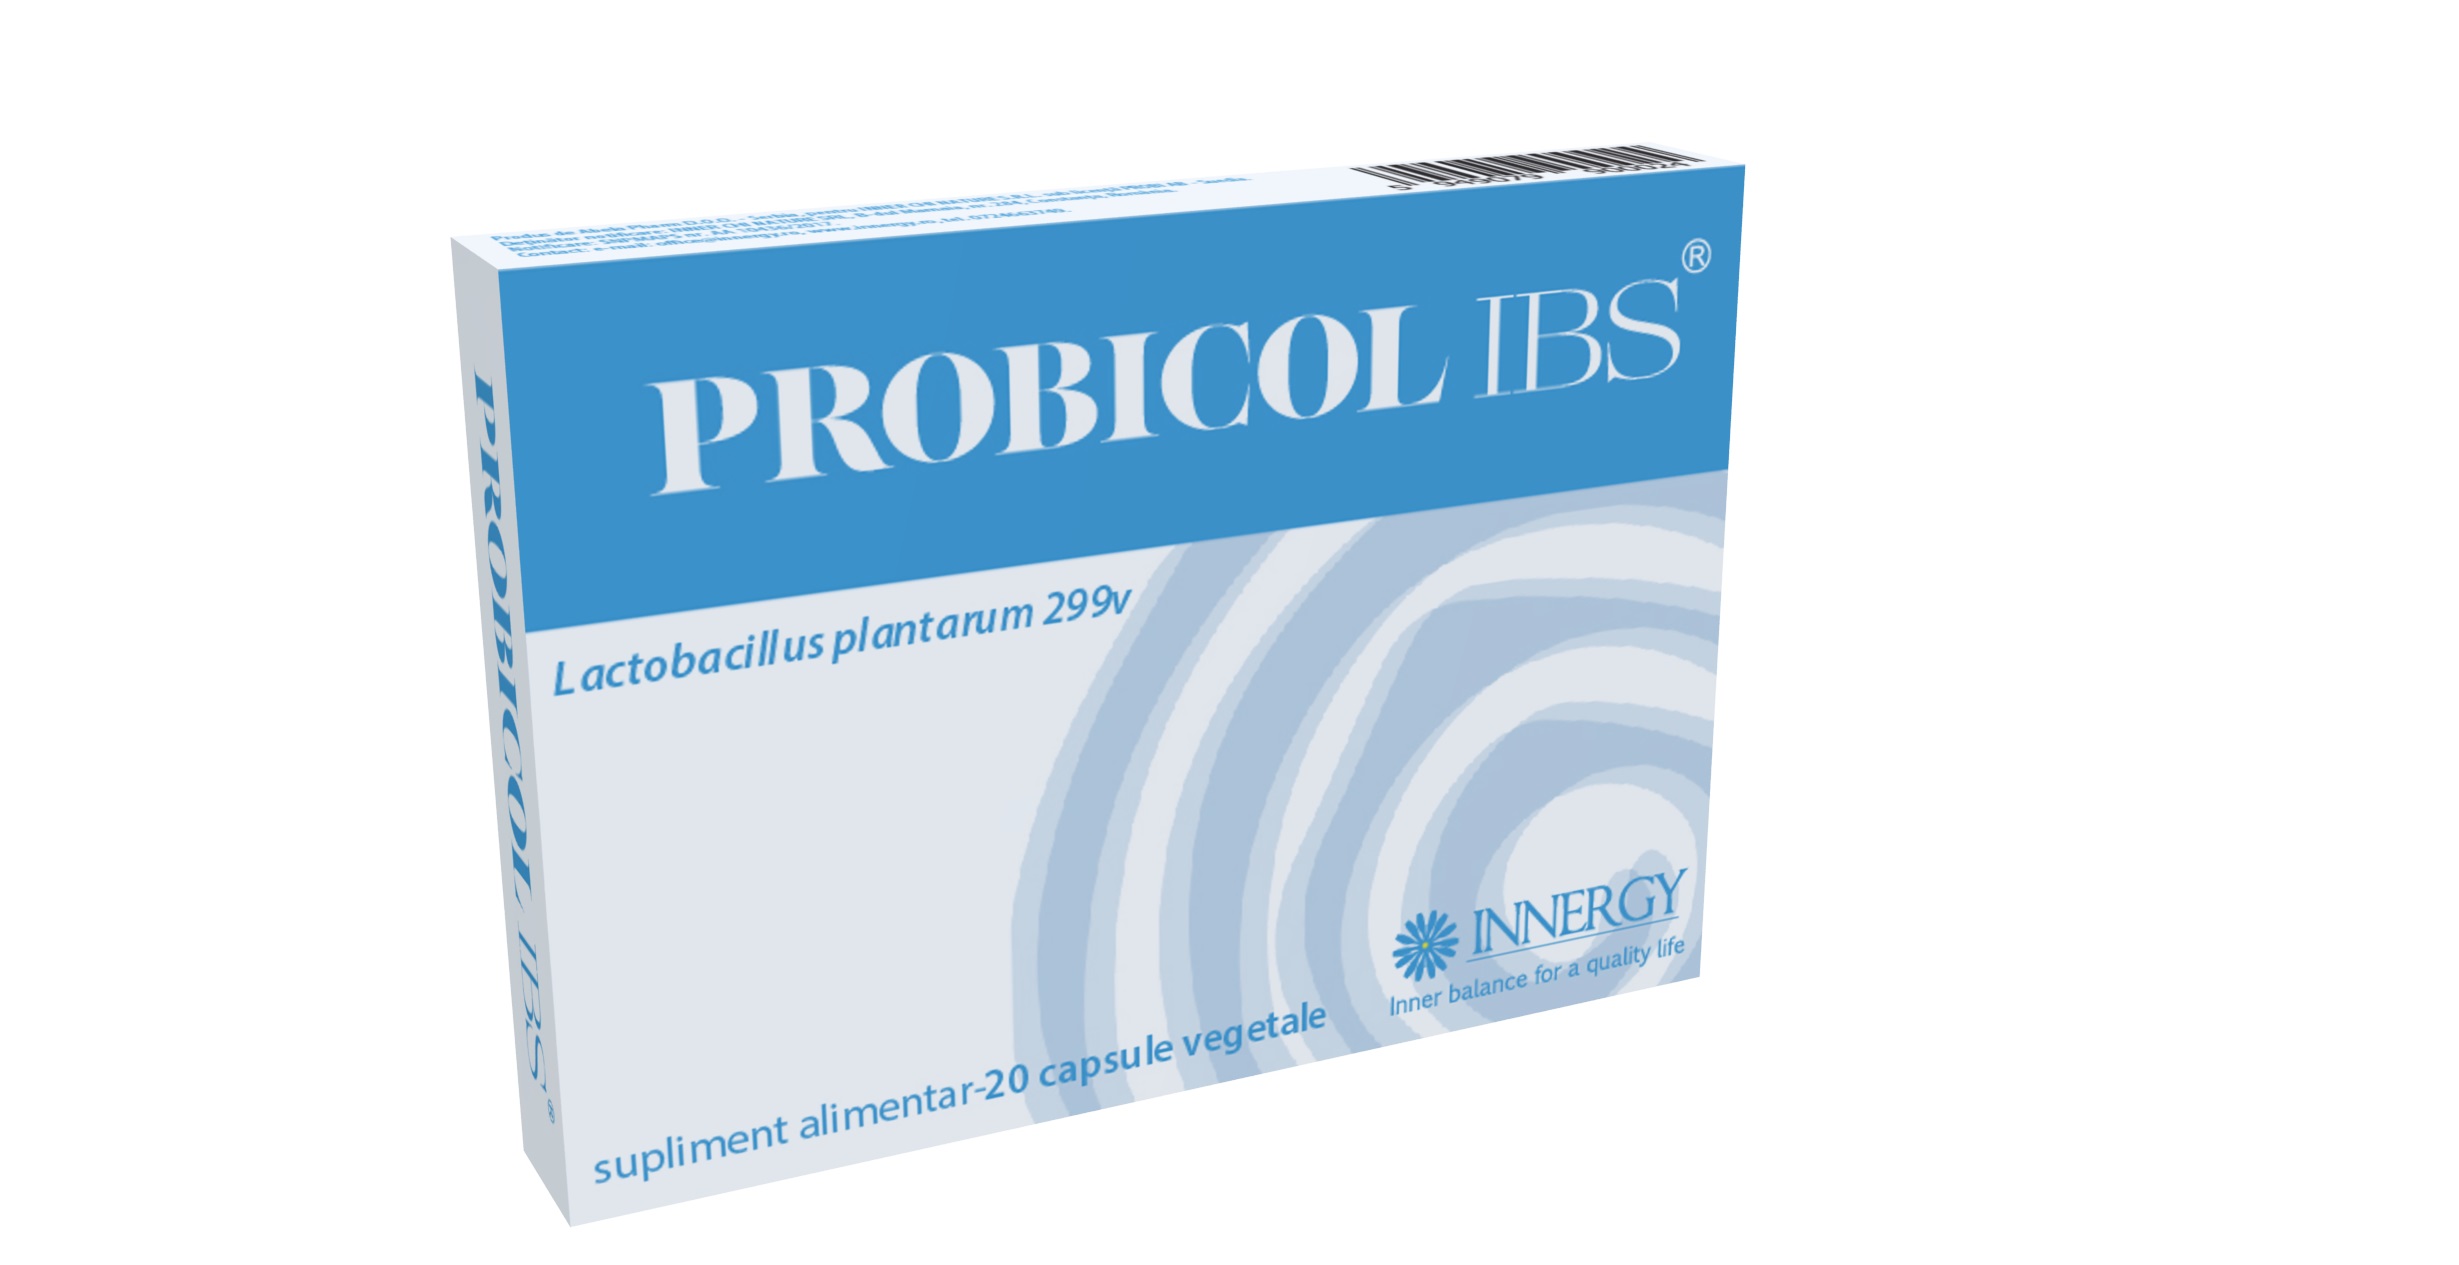 PROBICOL IBS 20 CAPSULE helpnet imagine noua